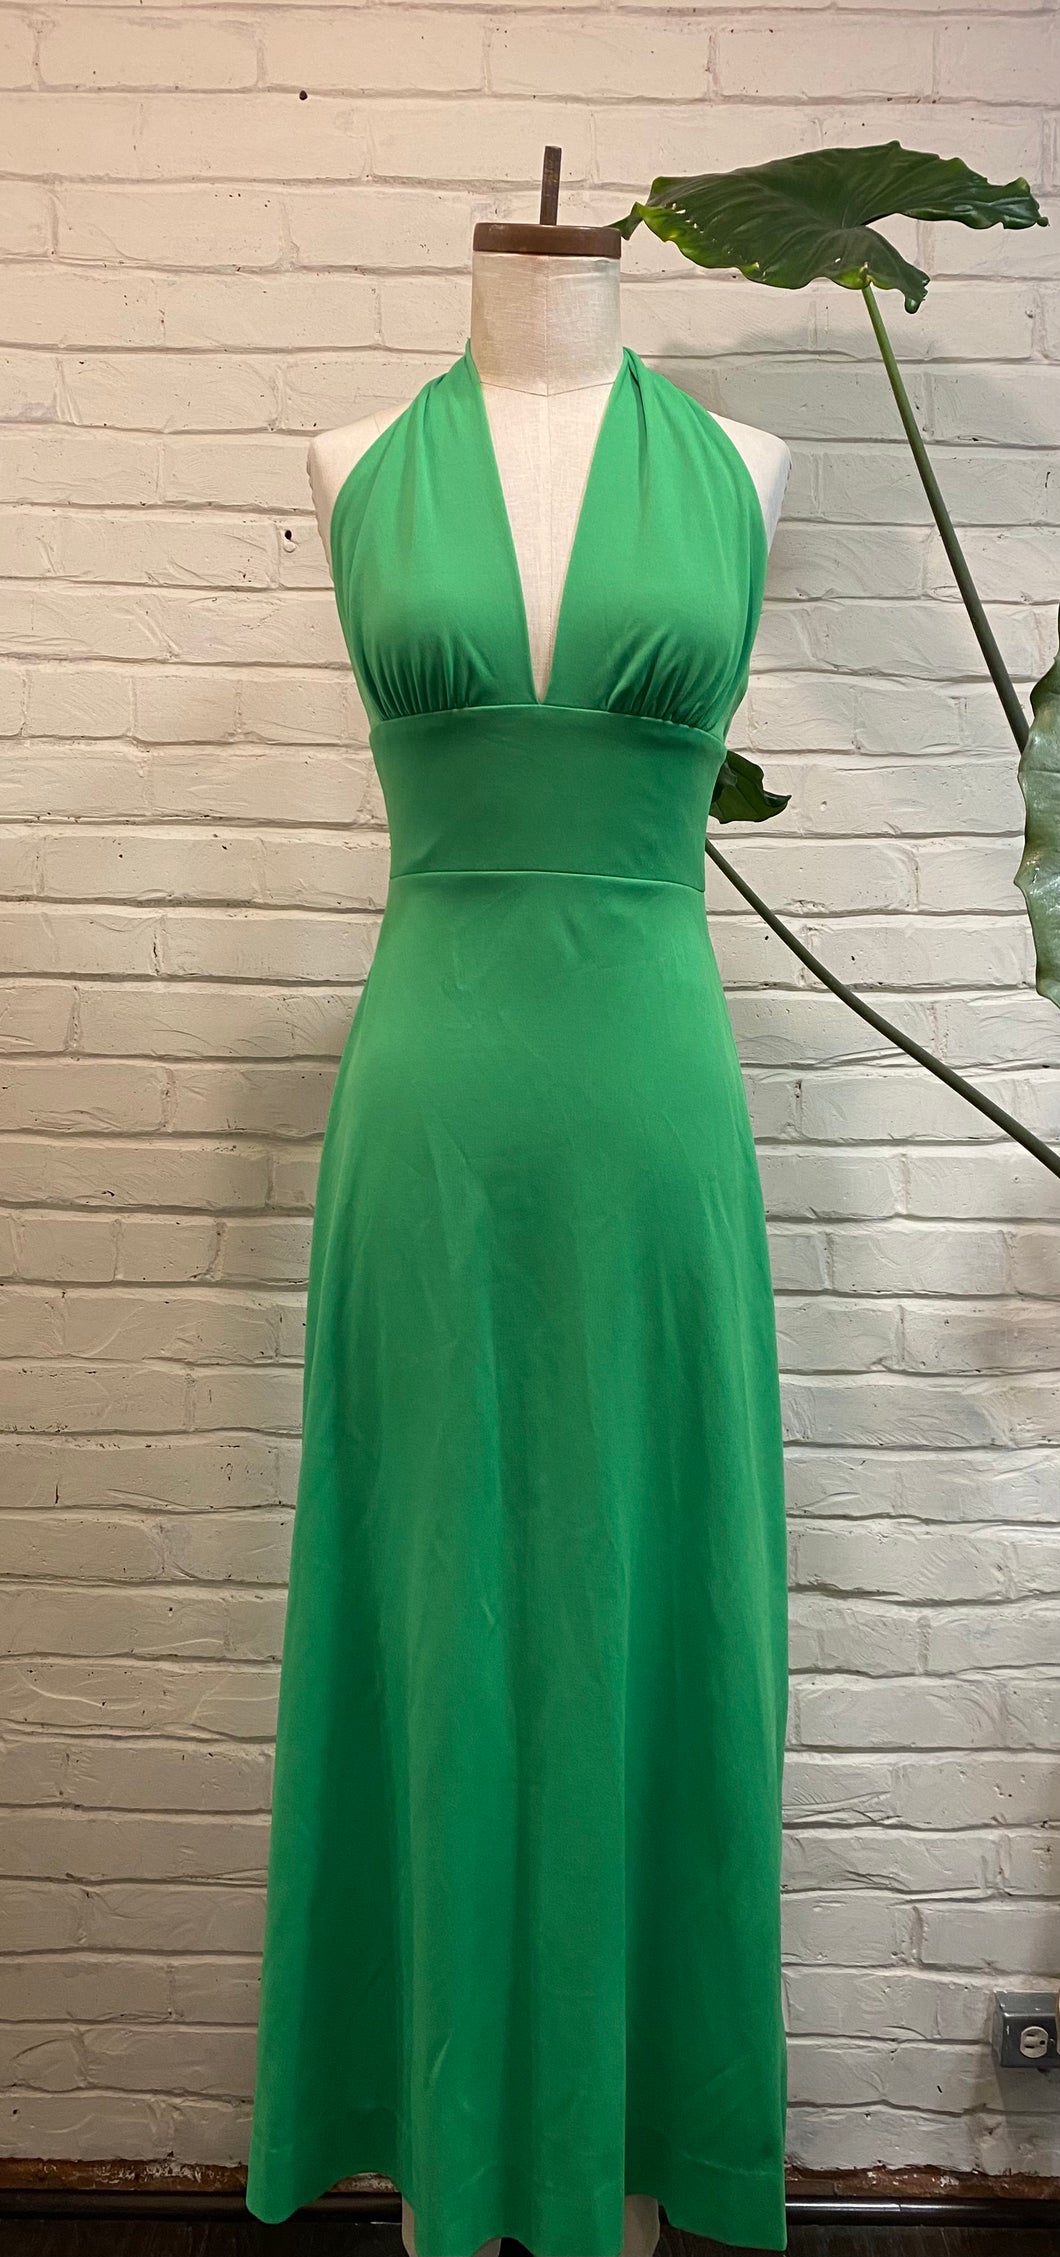 Vintage 1970’s Lime Green Maxi Dress